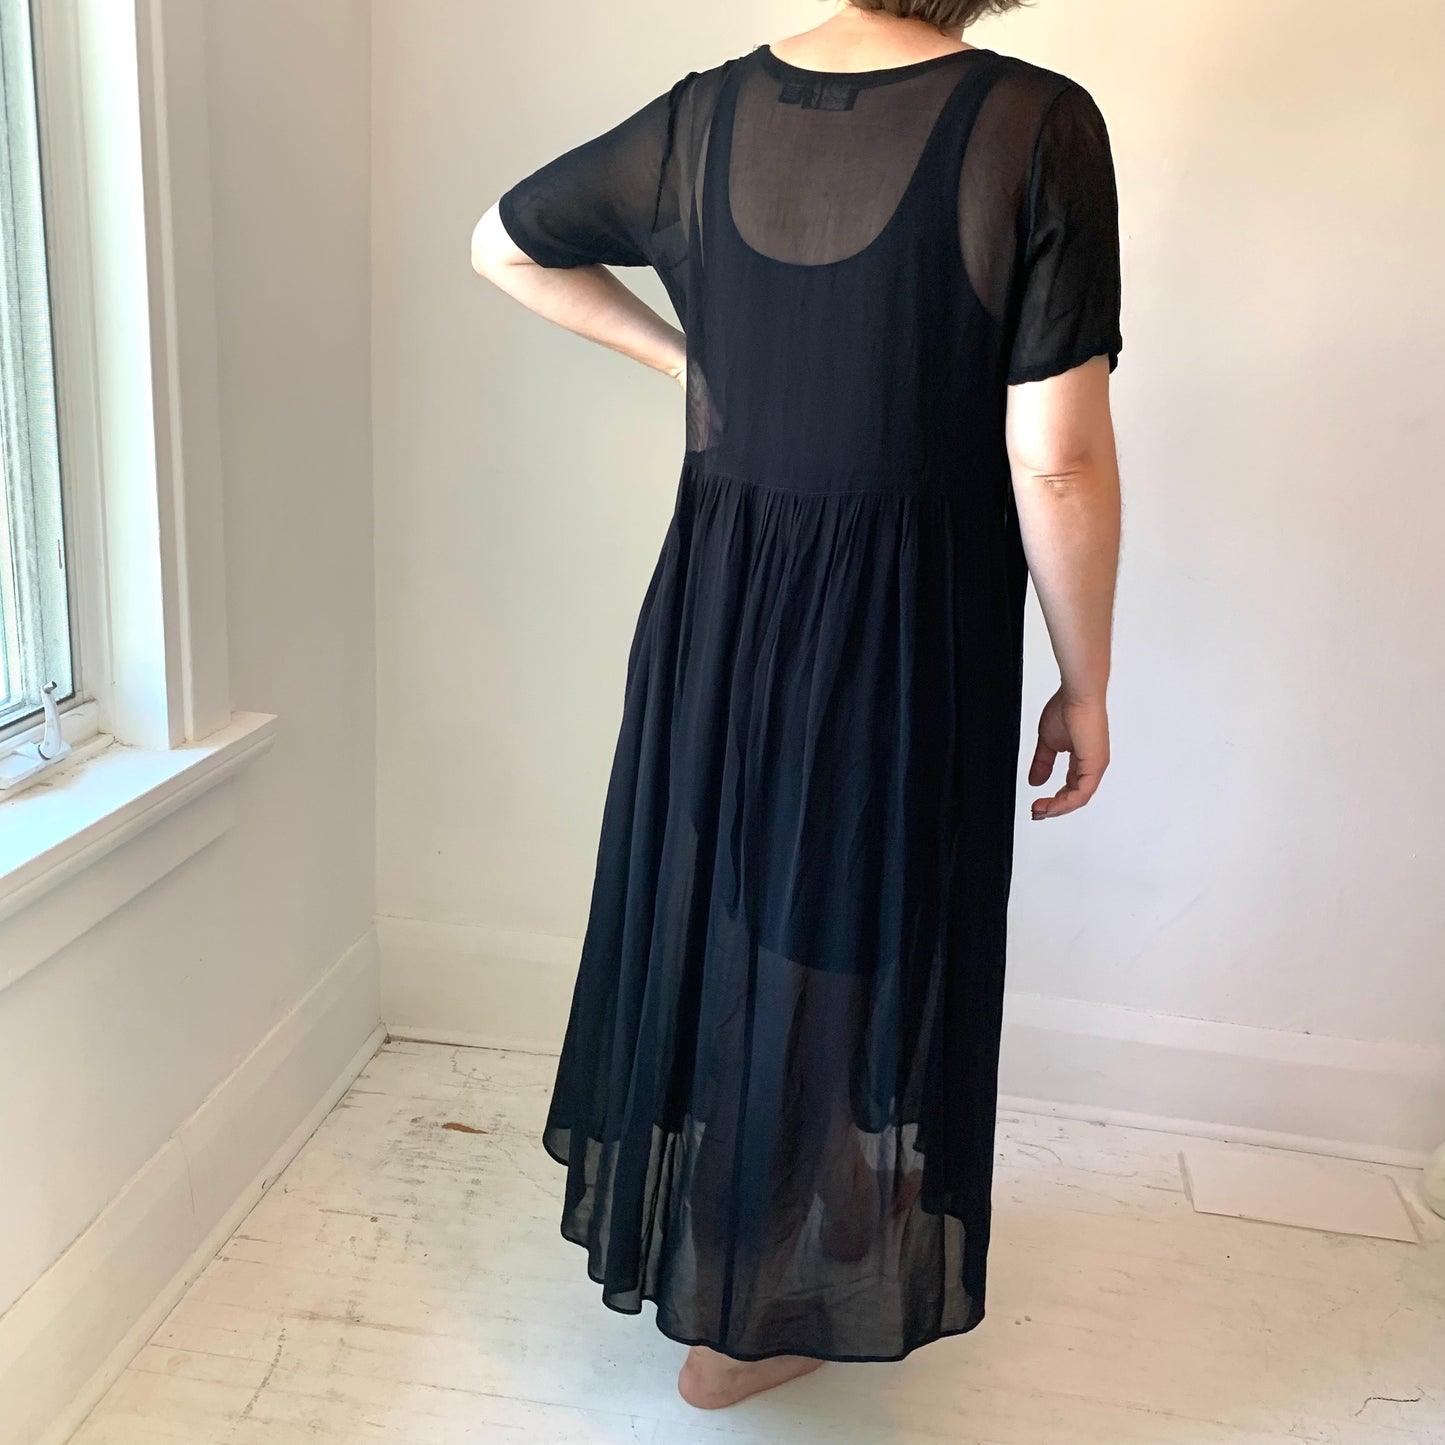 Swingy Black Sheer Dress